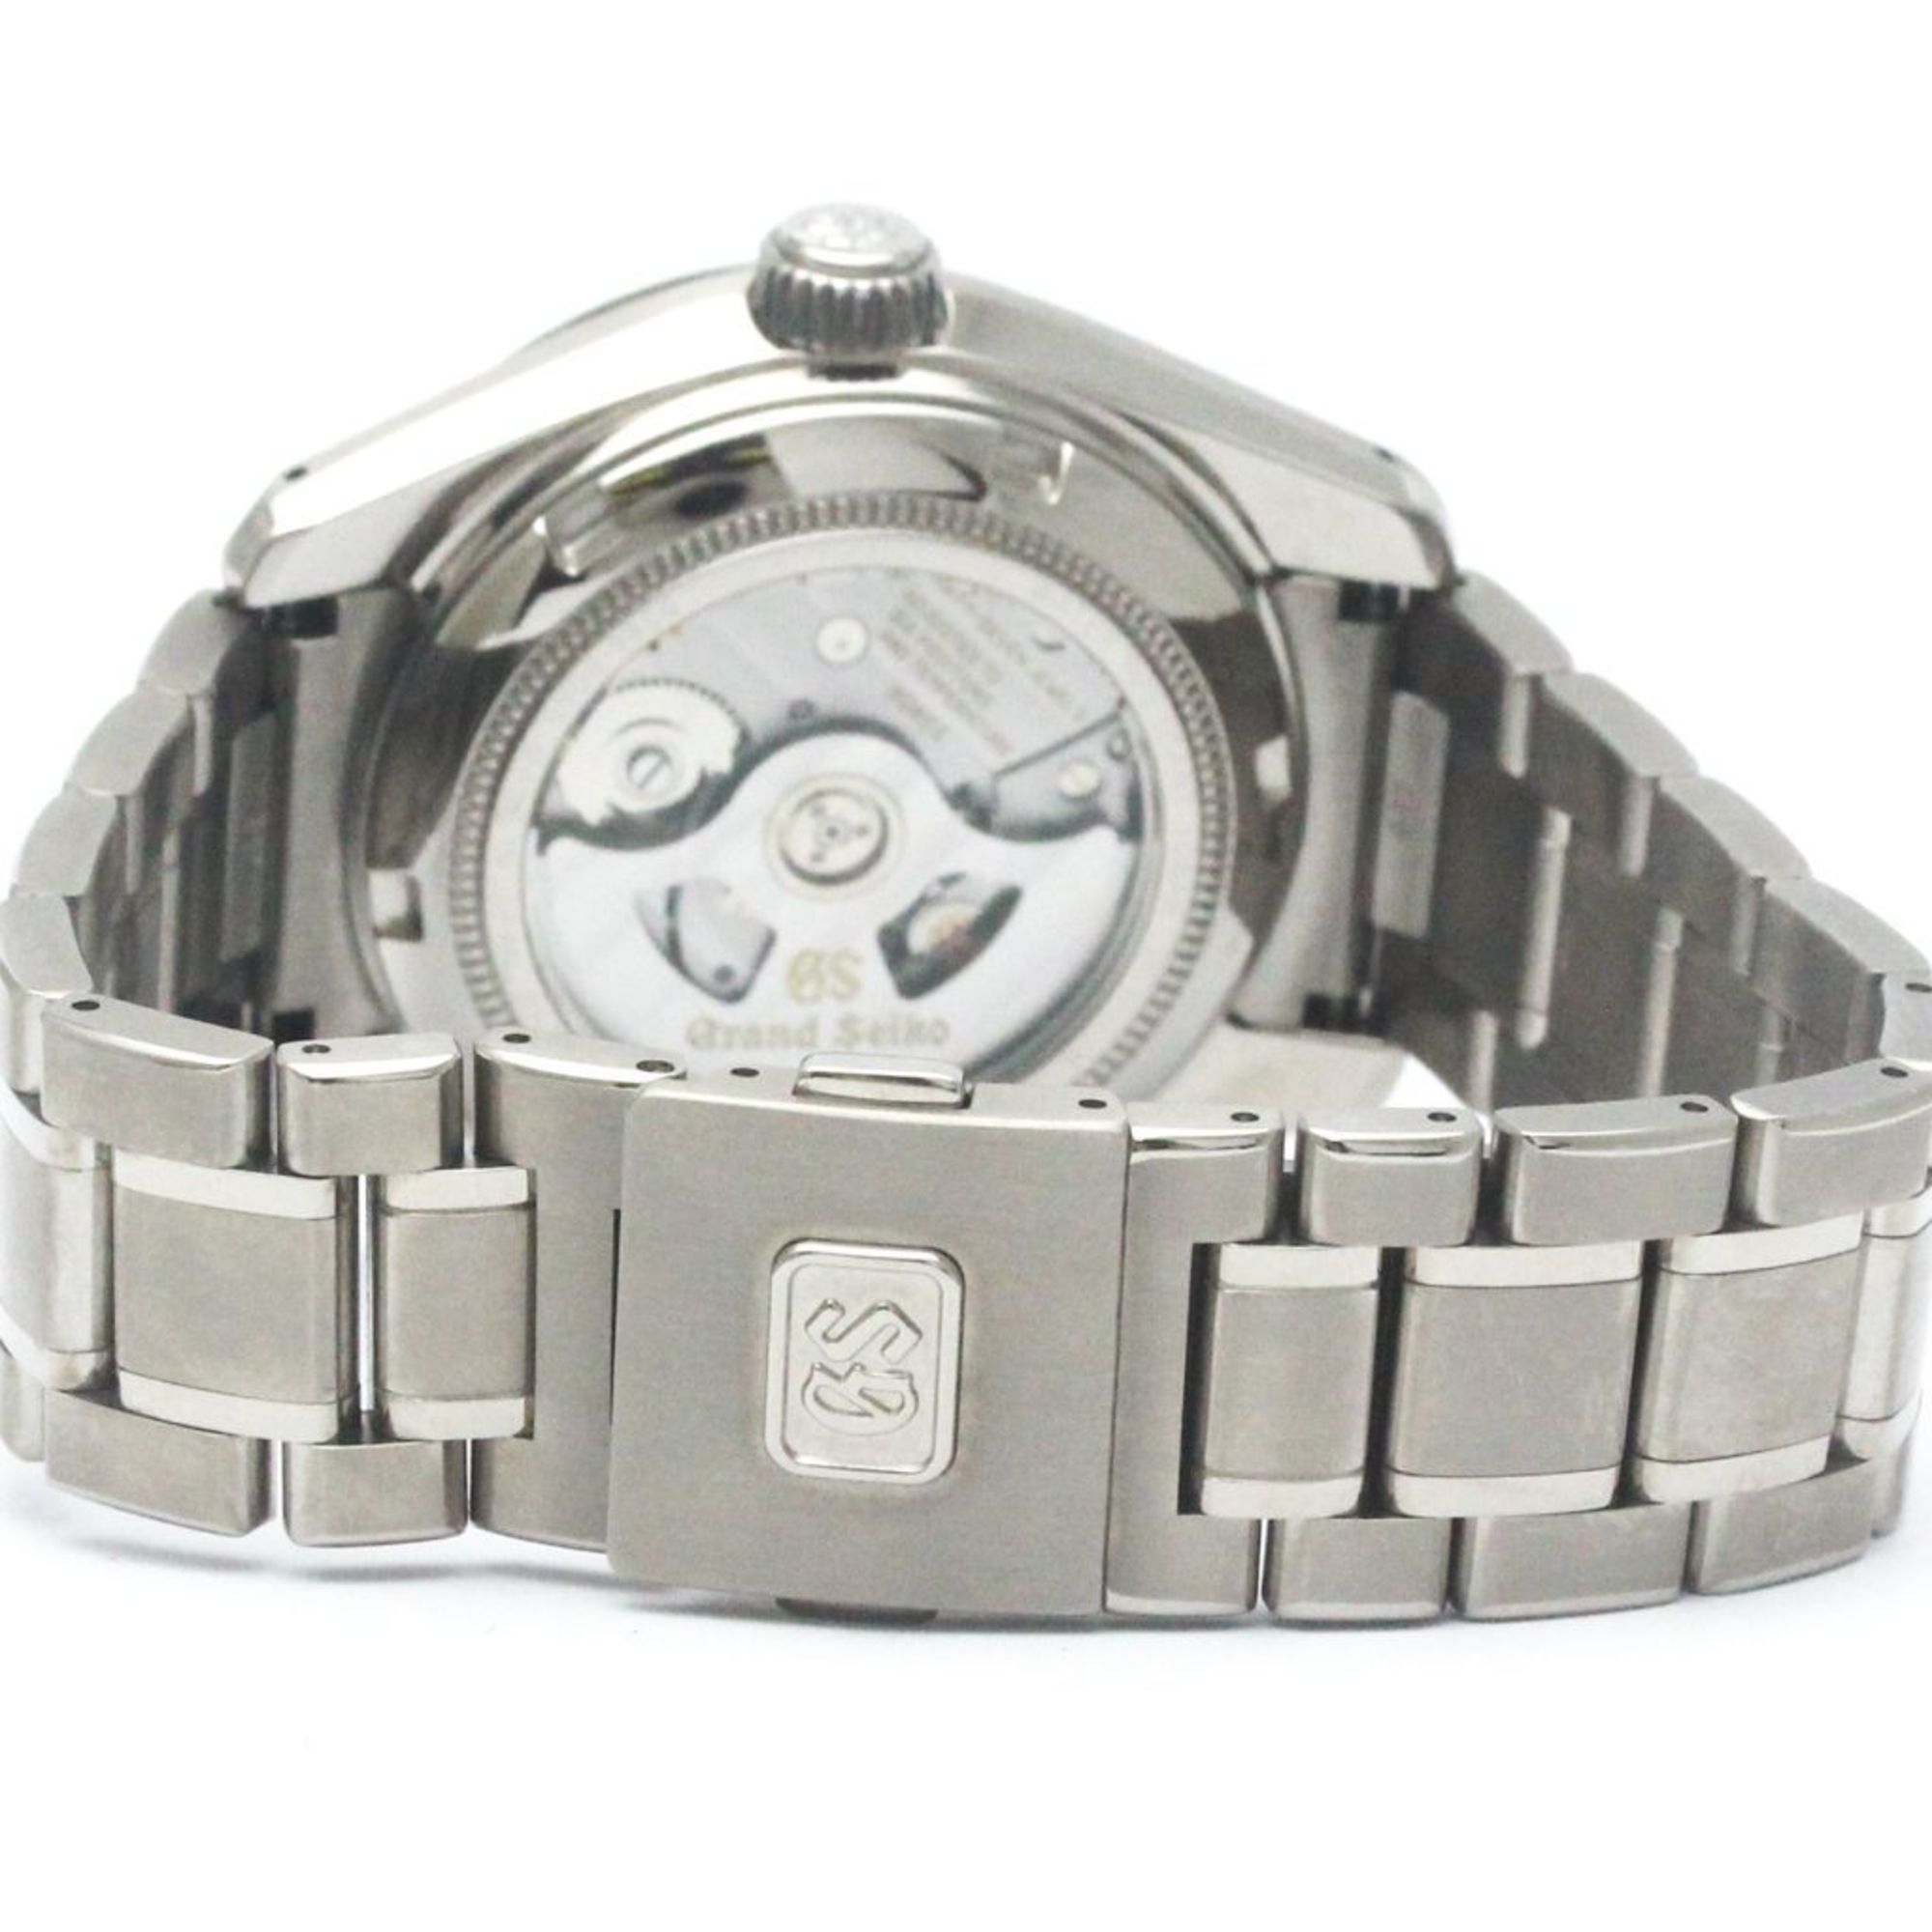 Polished GRAND SEIKO Hi-Beat 36000 GMT SBGJ011 Steel Watch 9S86-00A0 BF568958